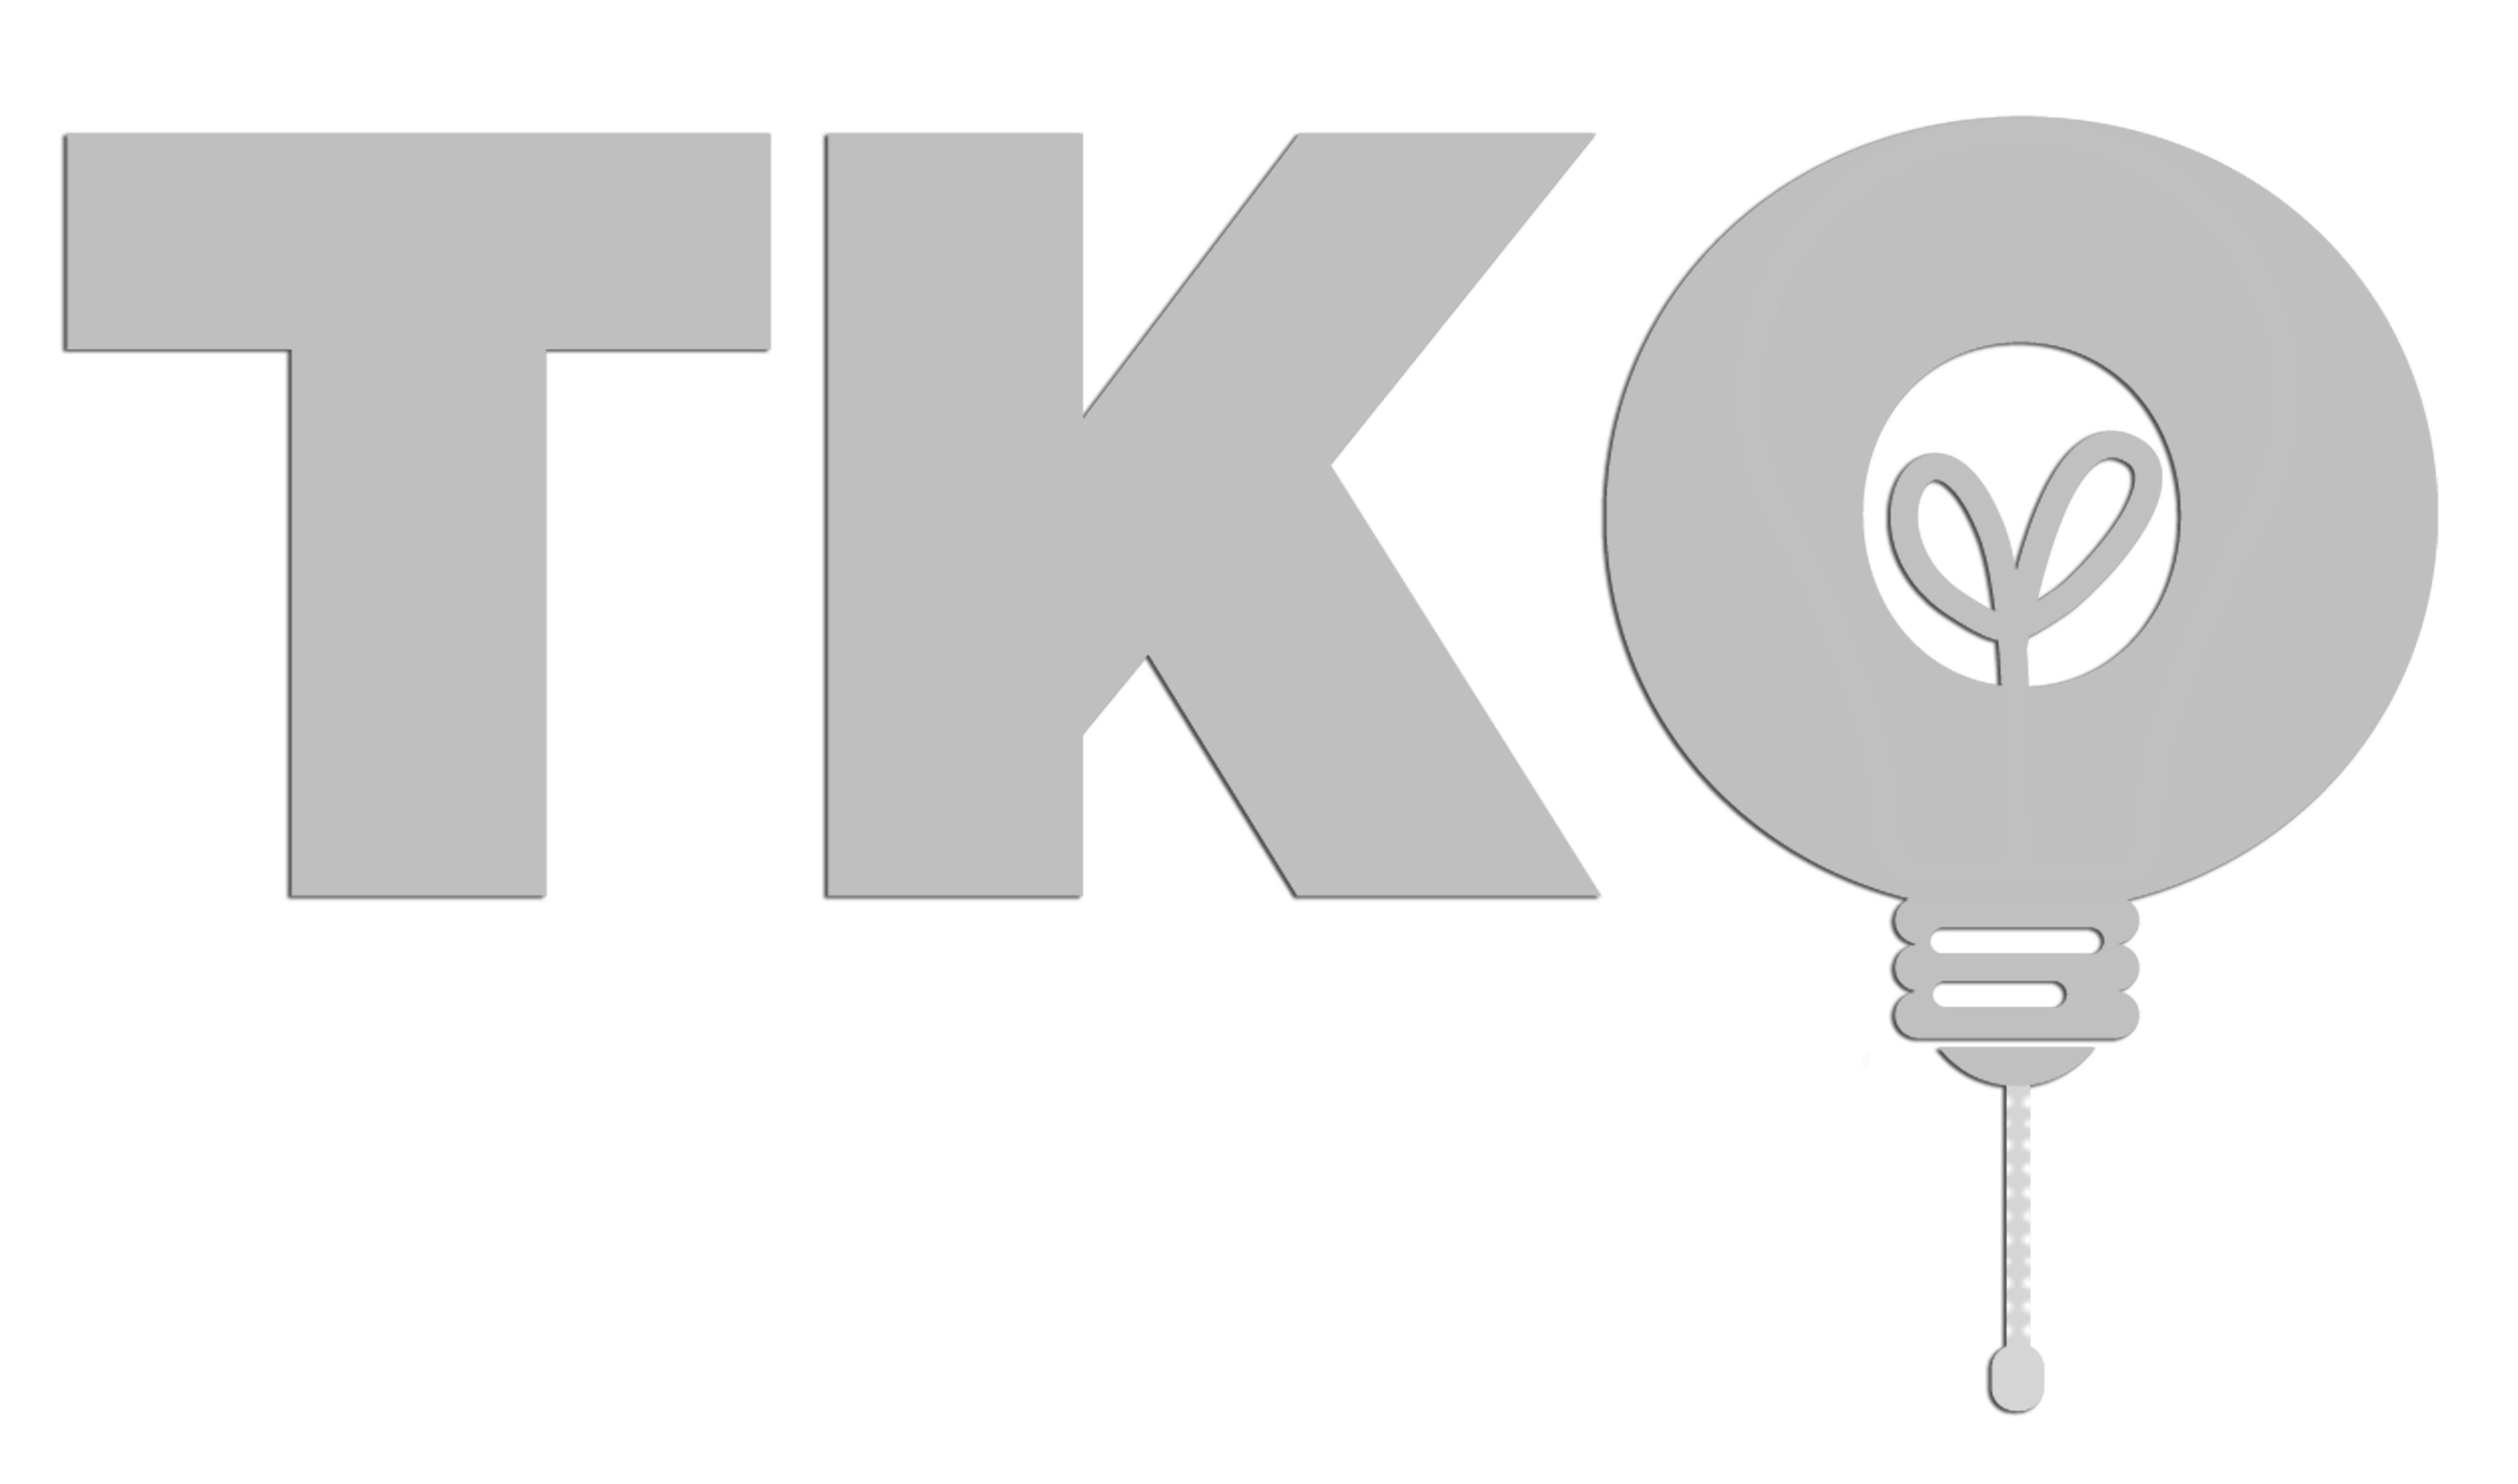 Trademark Logo TKO